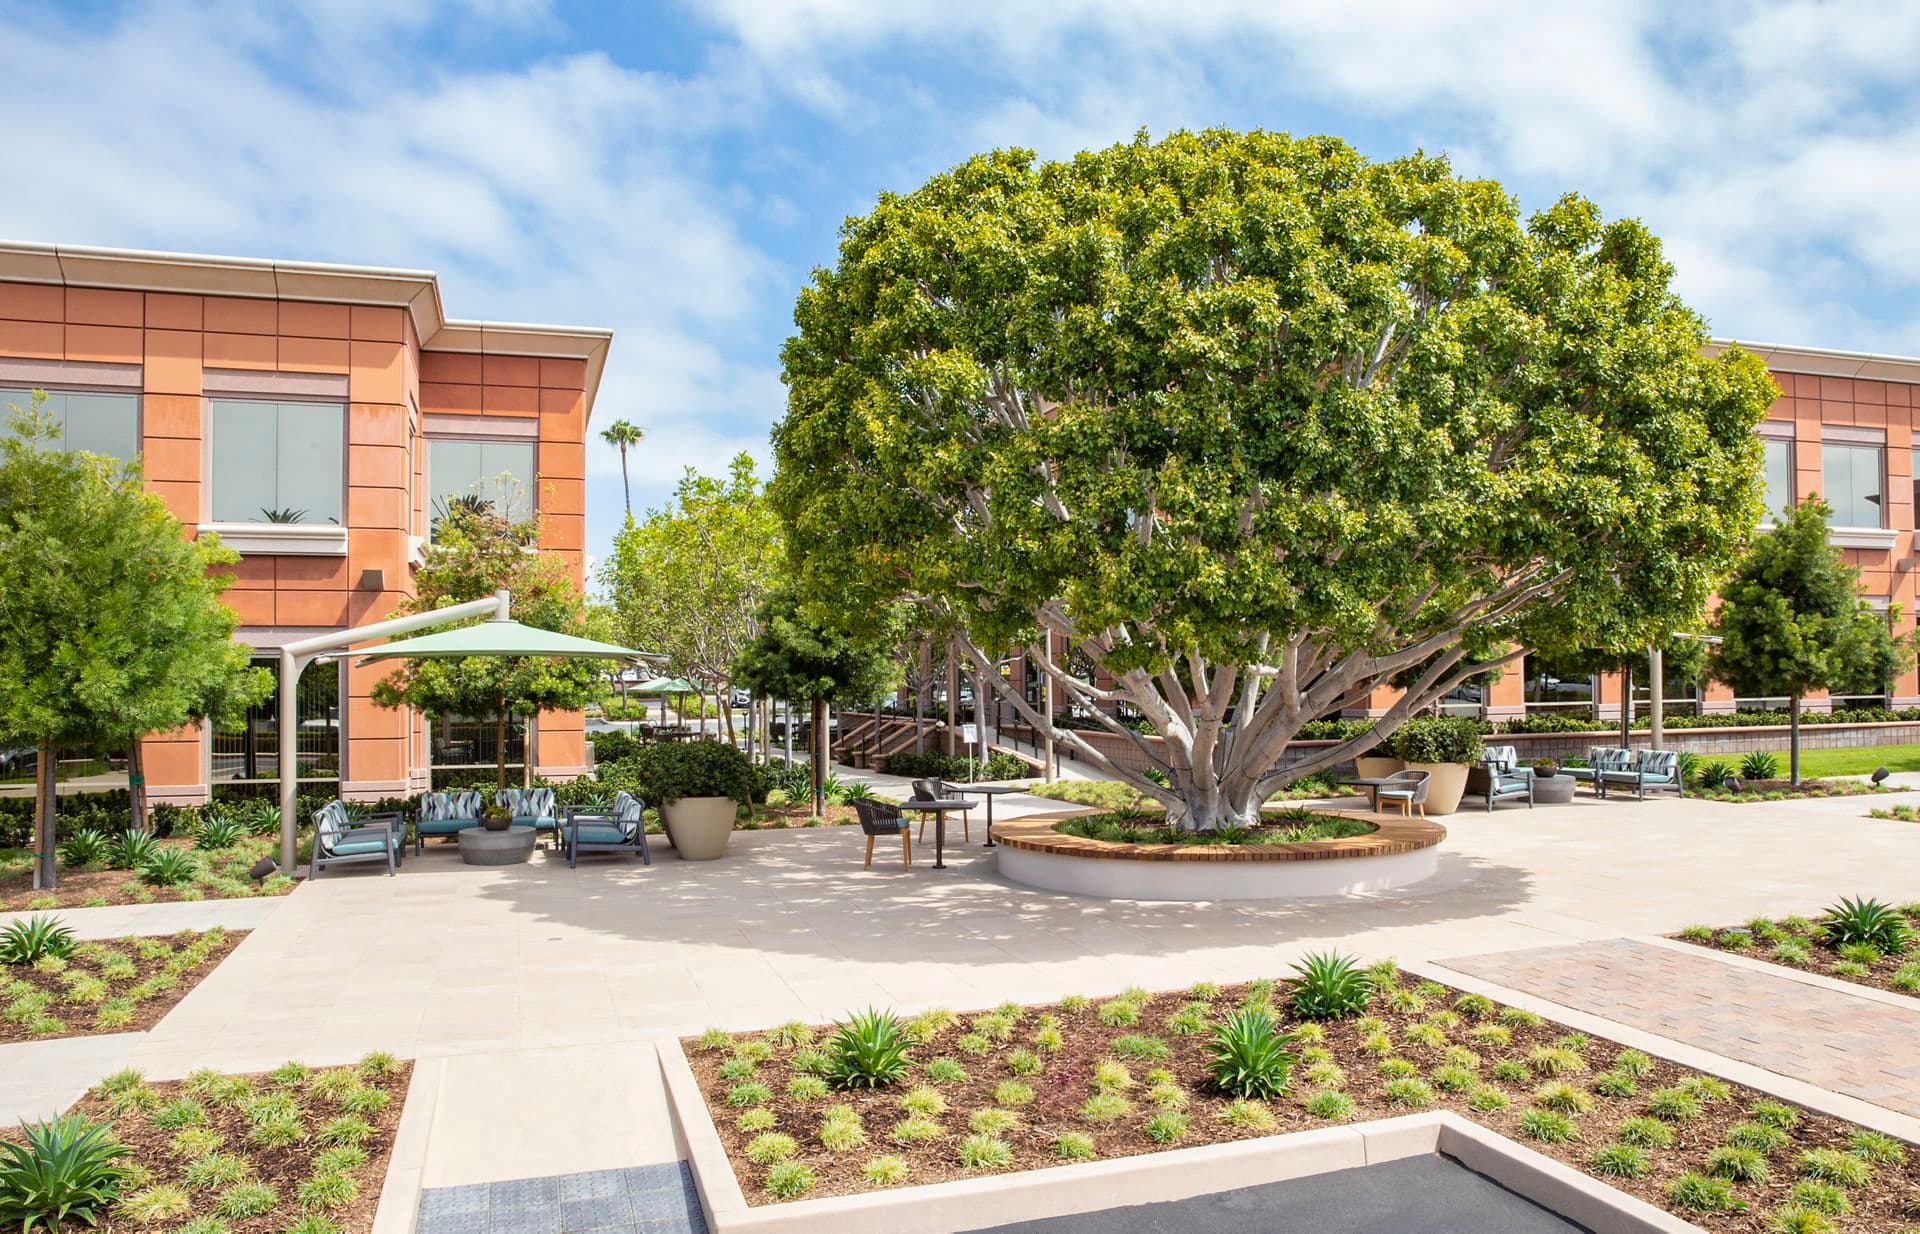 Exterior view of Corporate Plaza in Newport Beach, CA.